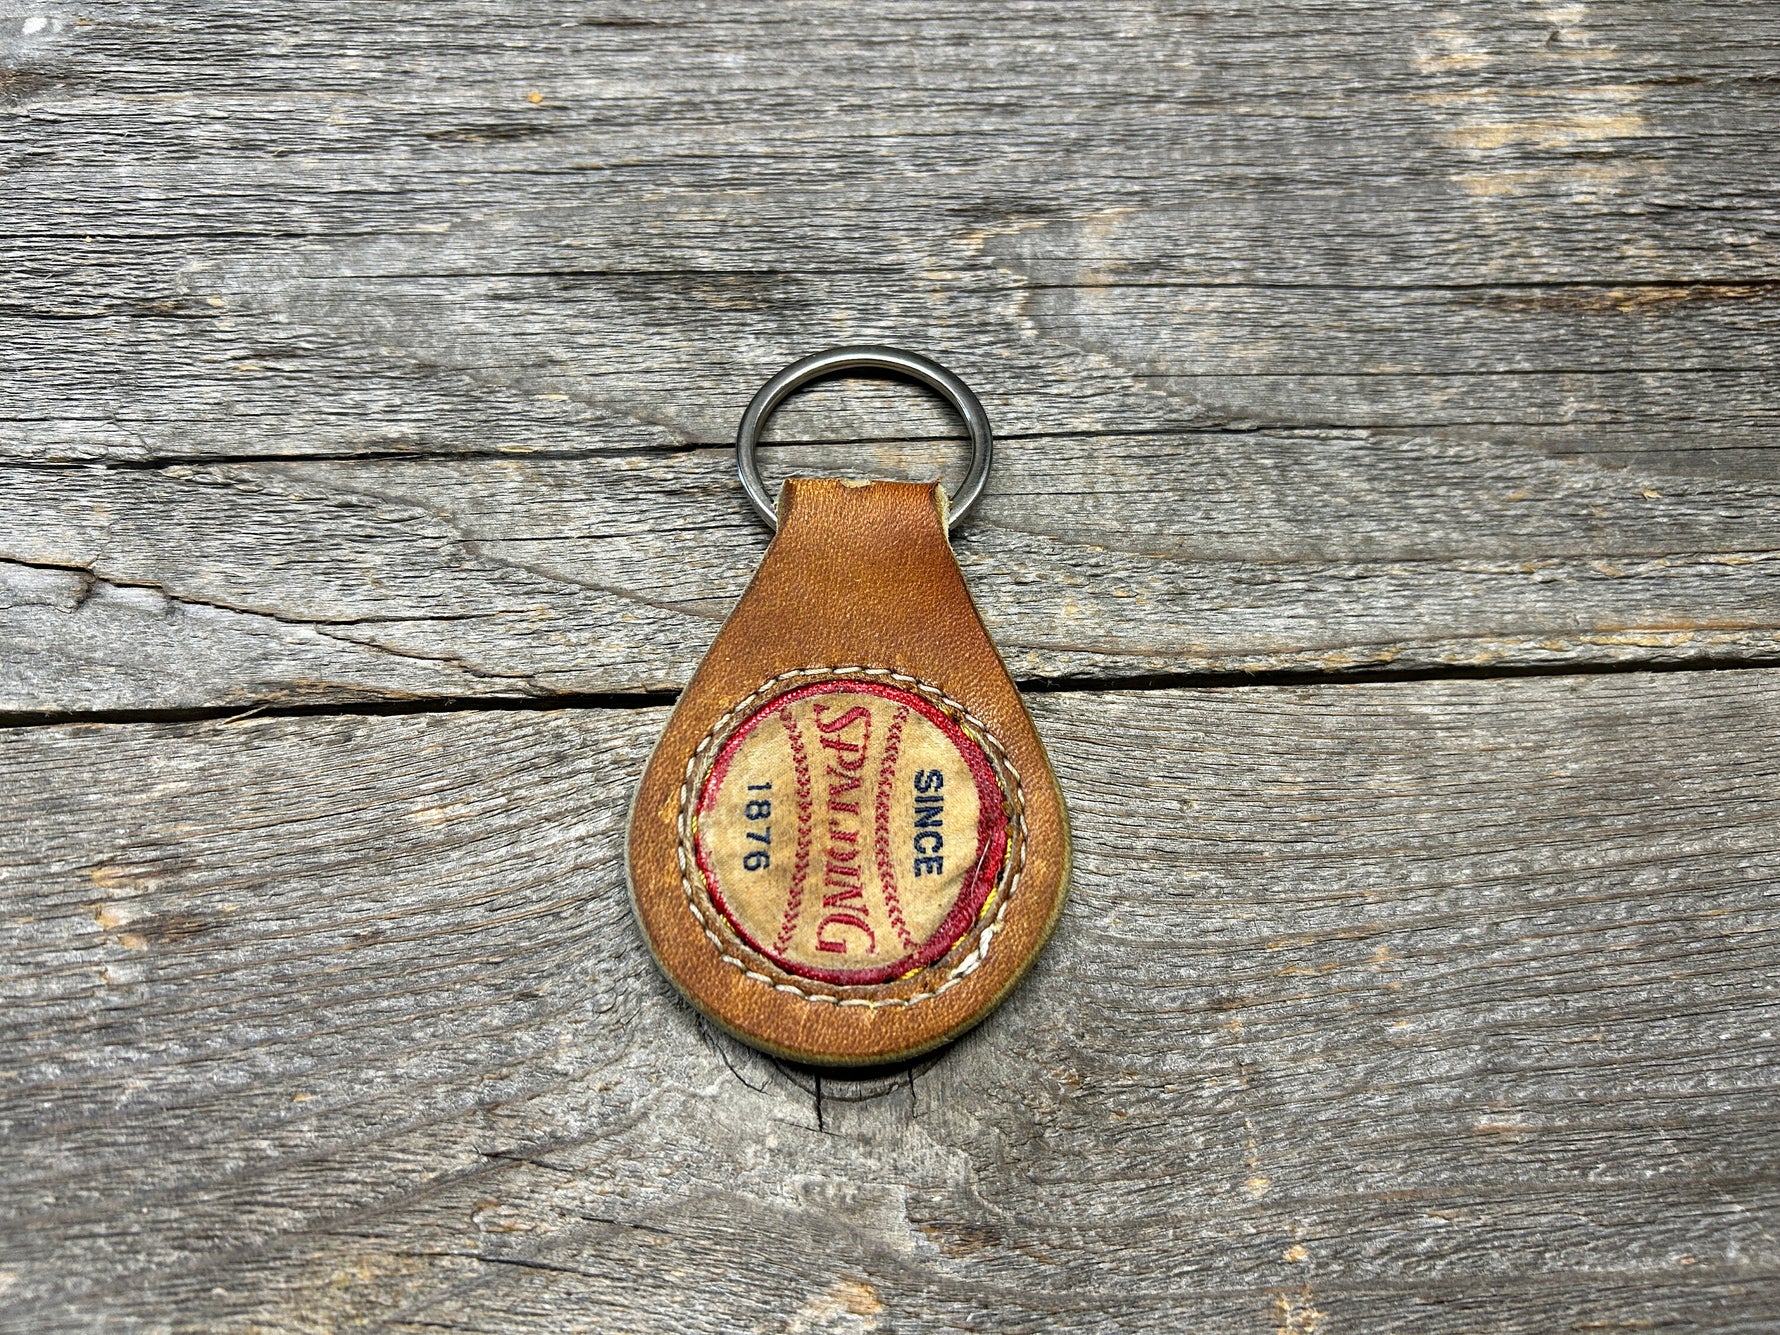 Vintage Spalding Baseball Glove Key Chain!